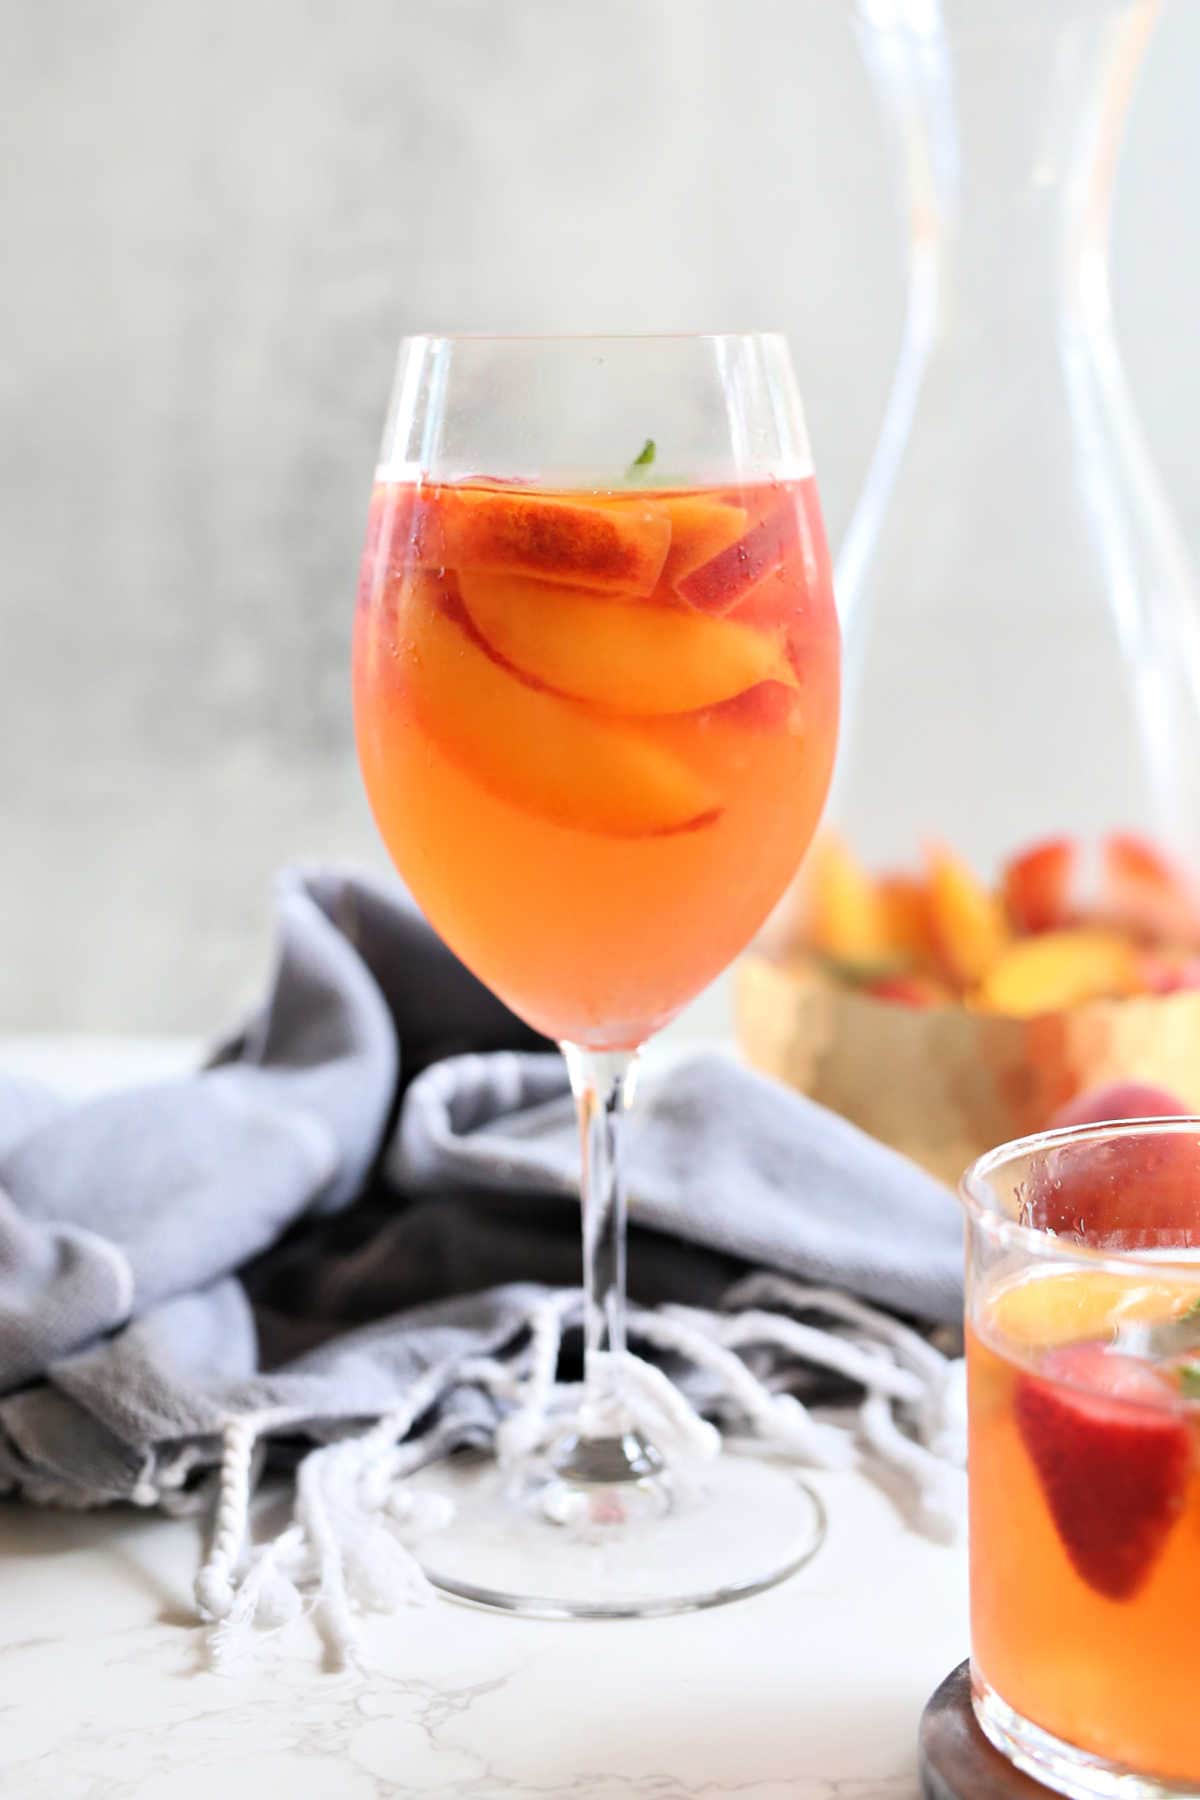 White peach sangria in a wine glass.